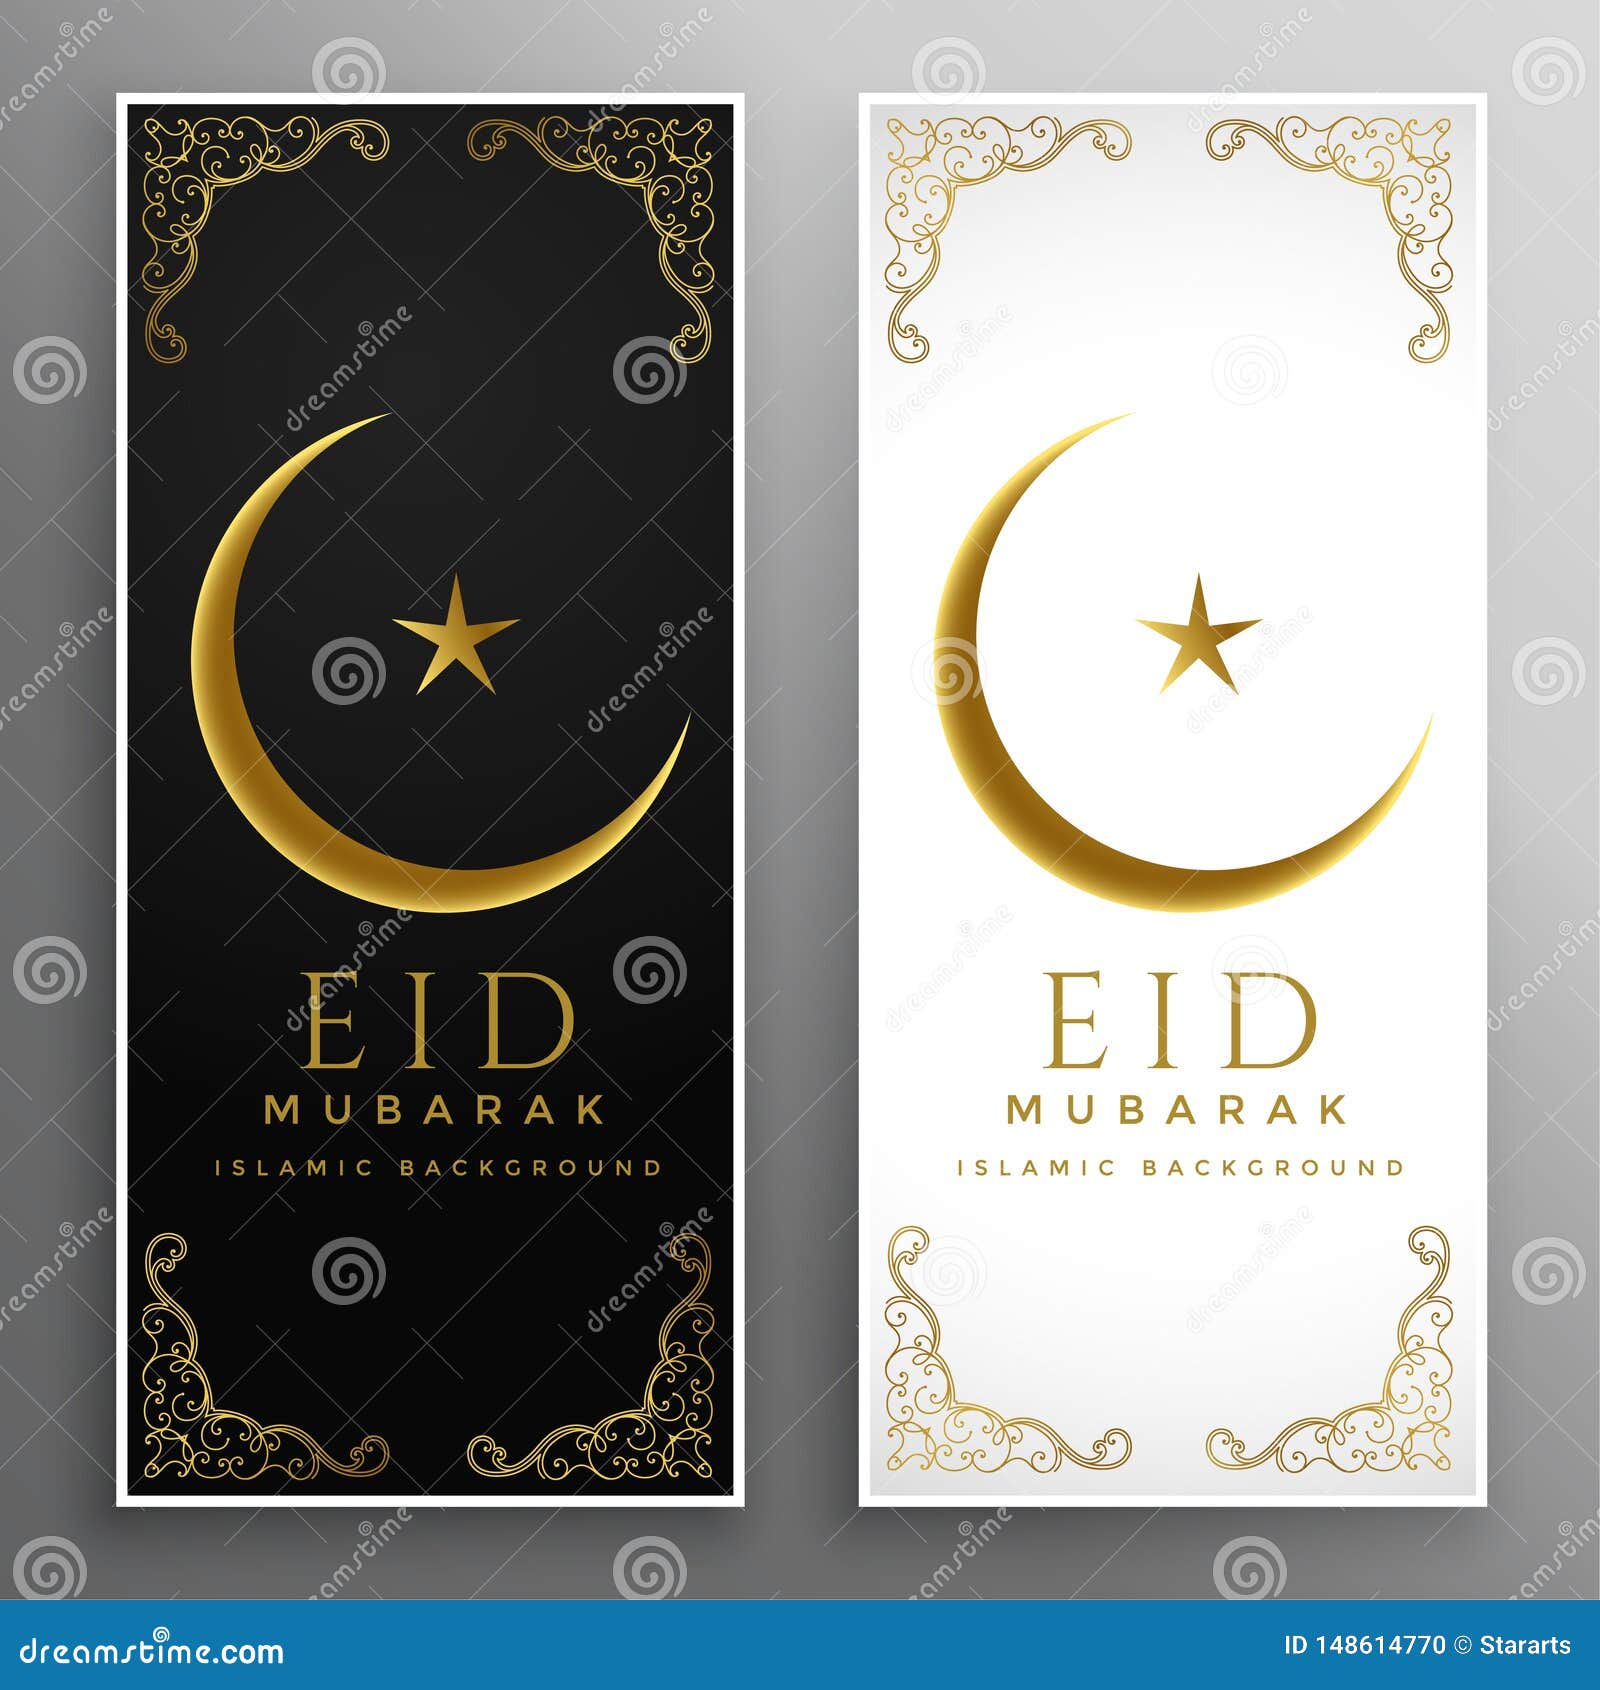 Elegant Black and White Eid Mubarak Card Design Stock Vector - Illustration  of holiday, creative: 148614770